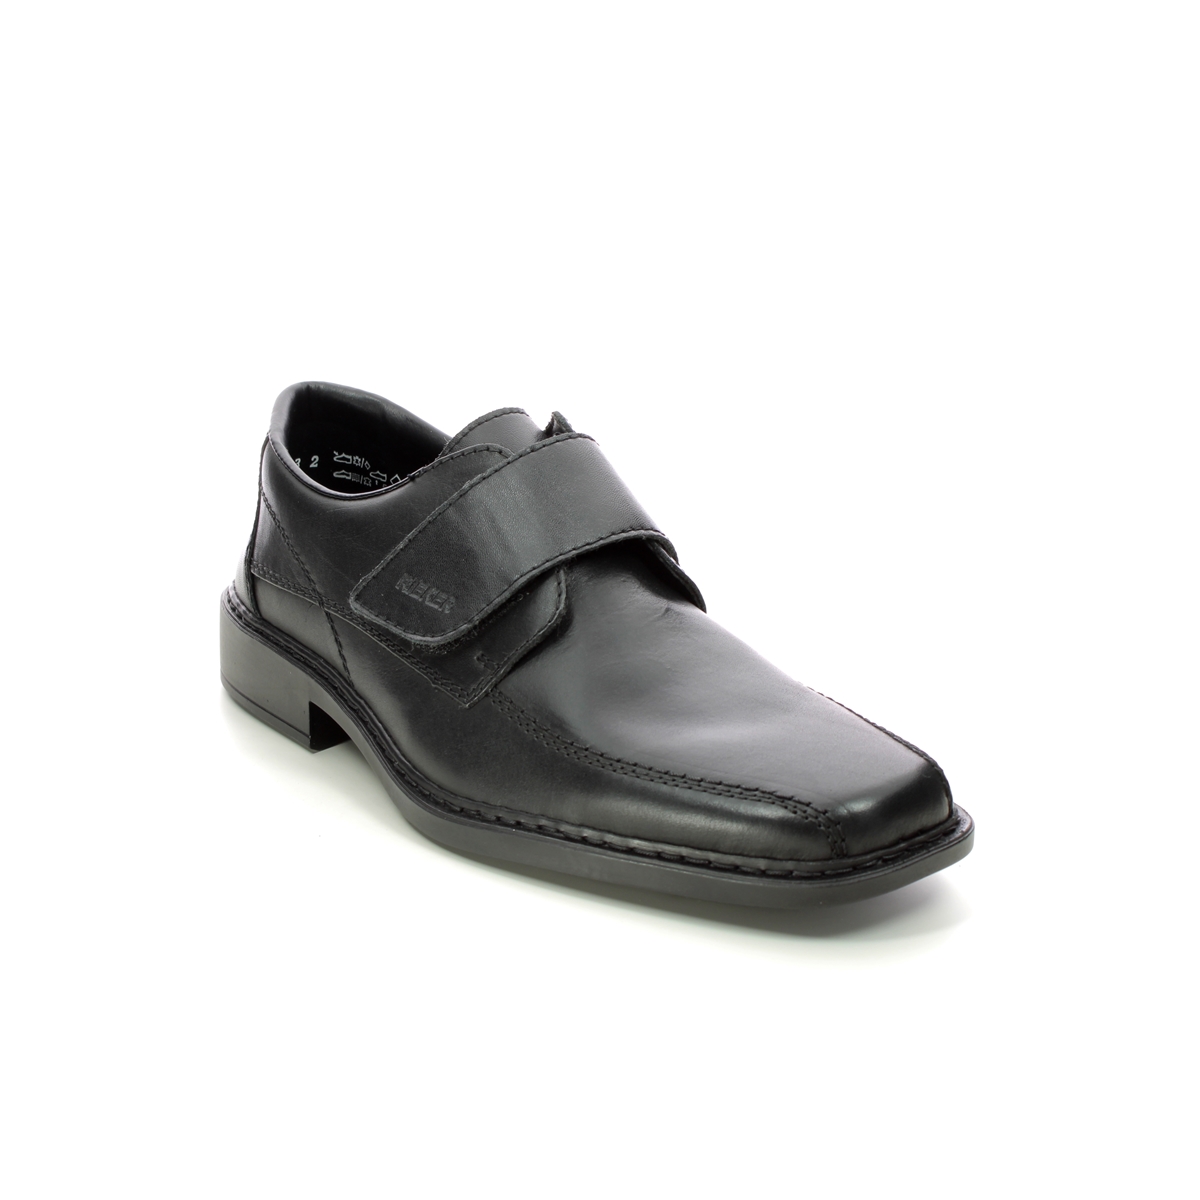 Rieker Smart Turn Black Leather Mens Riptape Shoes B0853-00 In Size 47 In Plain Black Leather